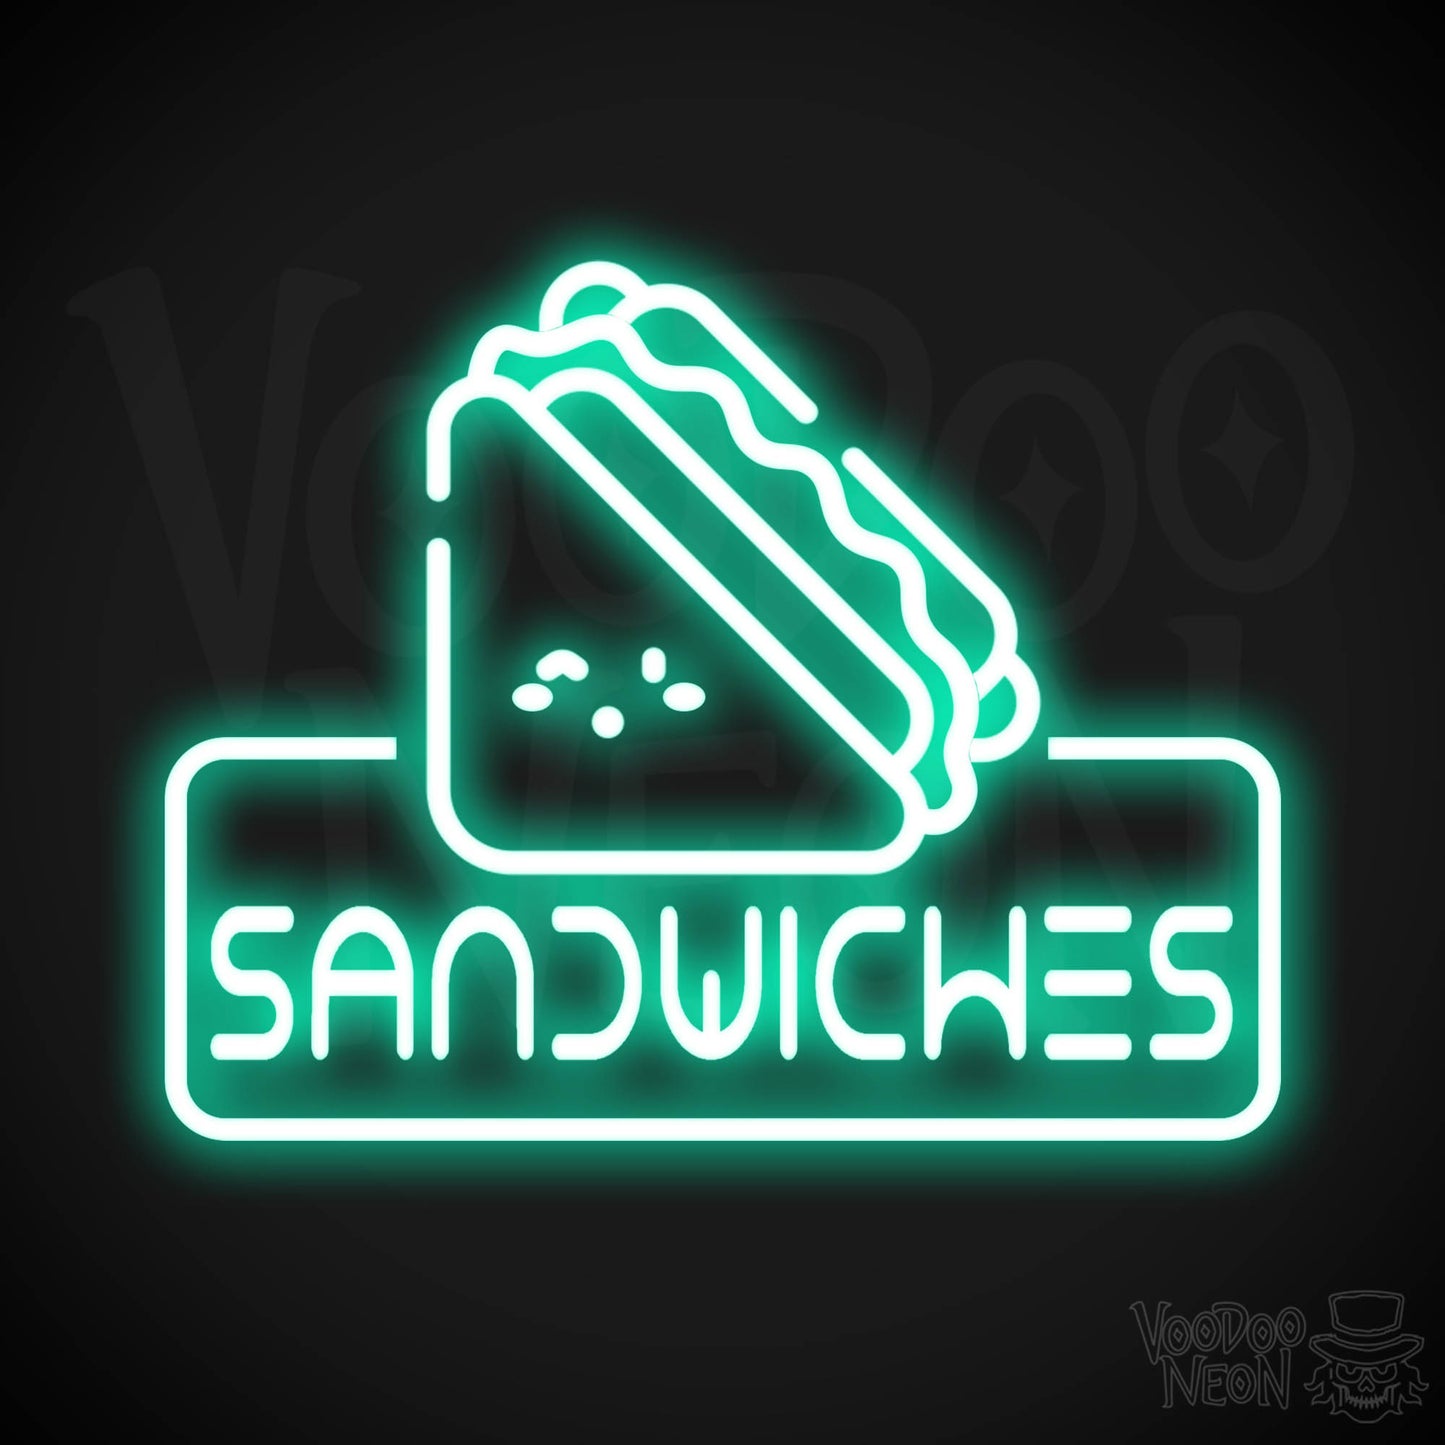 Neon Sandwiches Sign - Sandwich Neon Sign - Neon Sandwich Shop Sign - Color Light Green